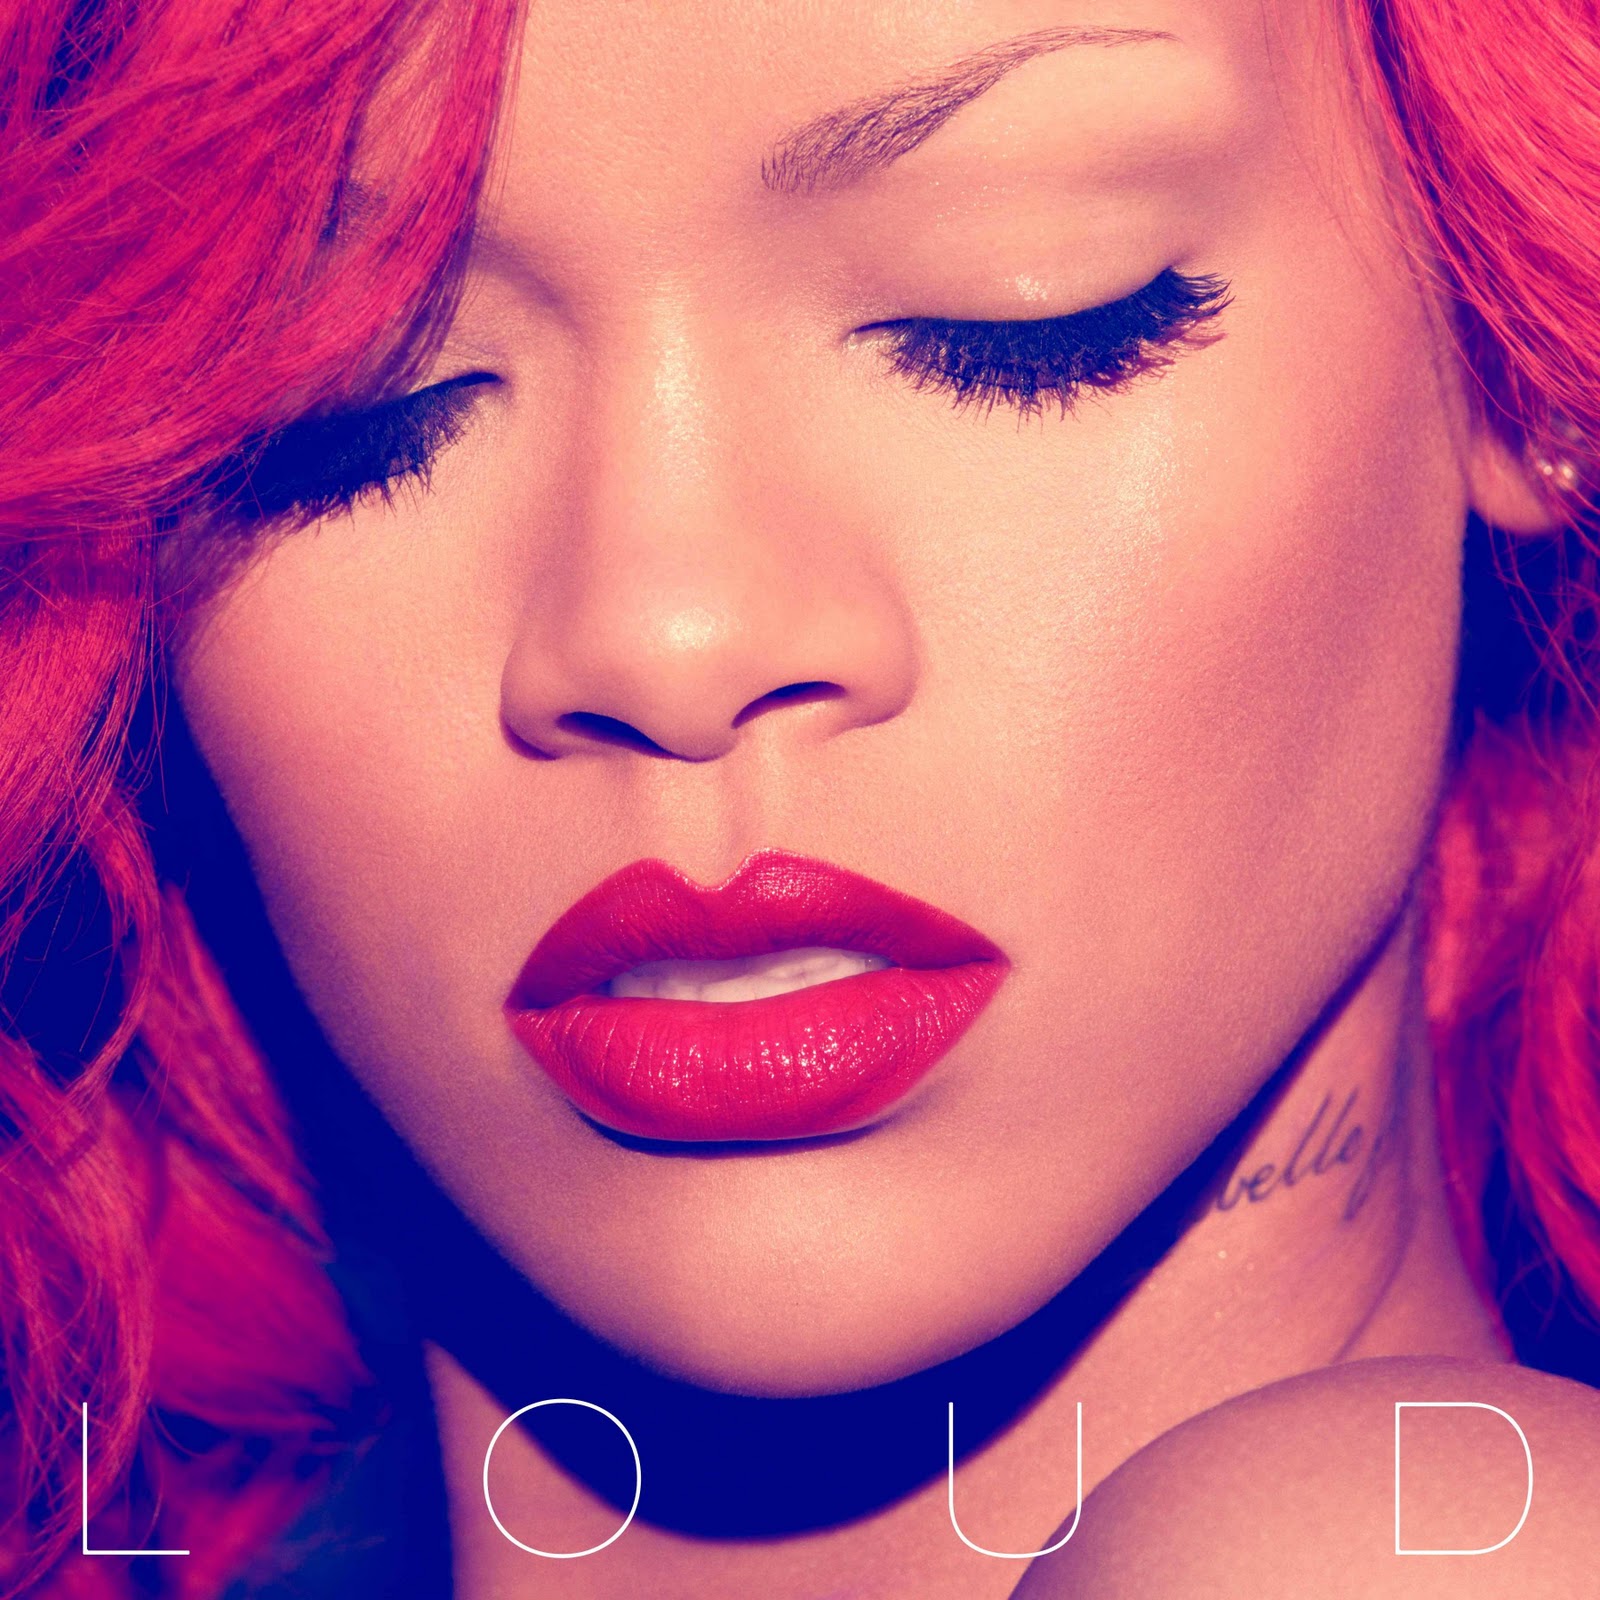 http://3.bp.blogspot.com/_lgTyldTrebU/TVMhrknu2gI/AAAAAAAAANw/WjB32LzA8e8/s1600/Rihanna-Loud-Album-Cover.jpg